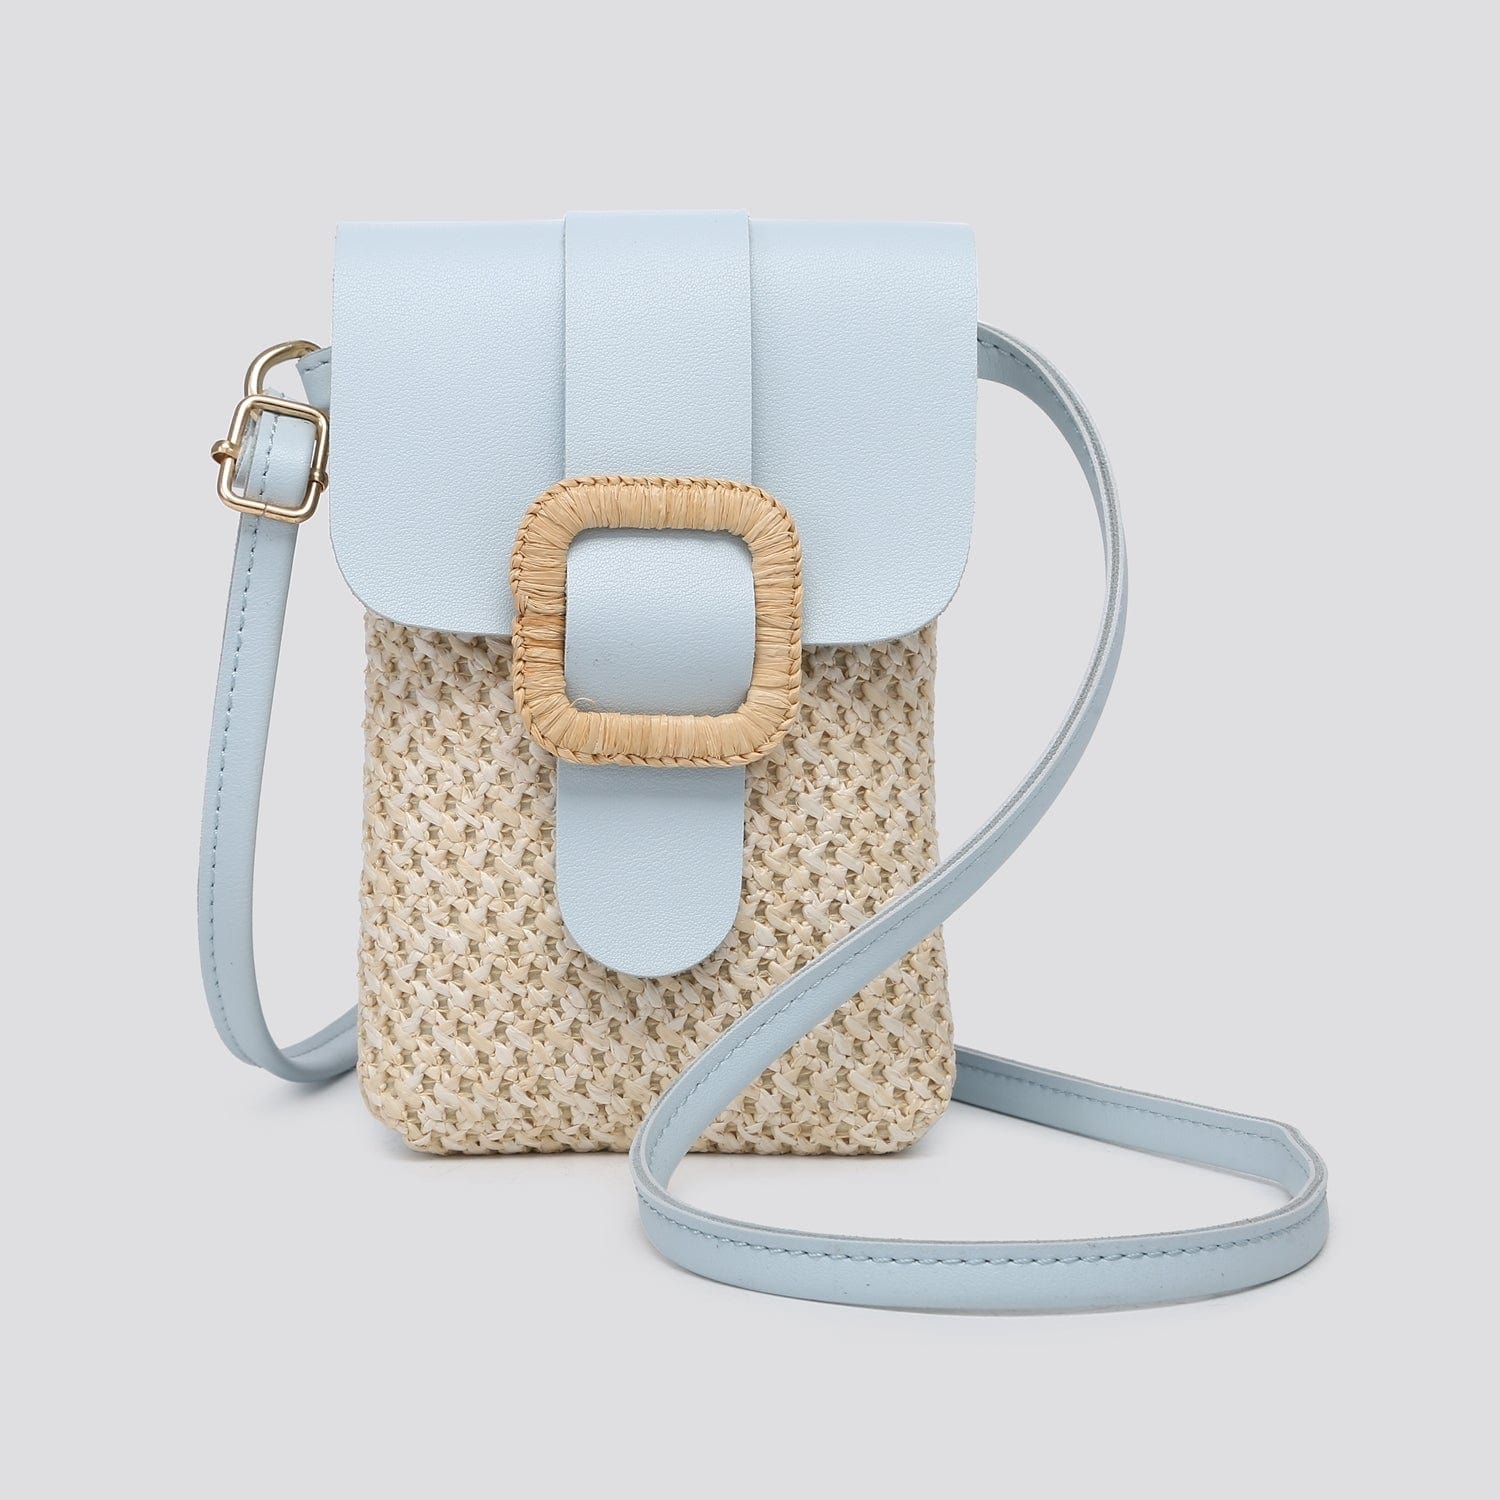 lusciousscarves Handbags Pale Blue Crossbody Phone Pouch , Woven Design Small Bag